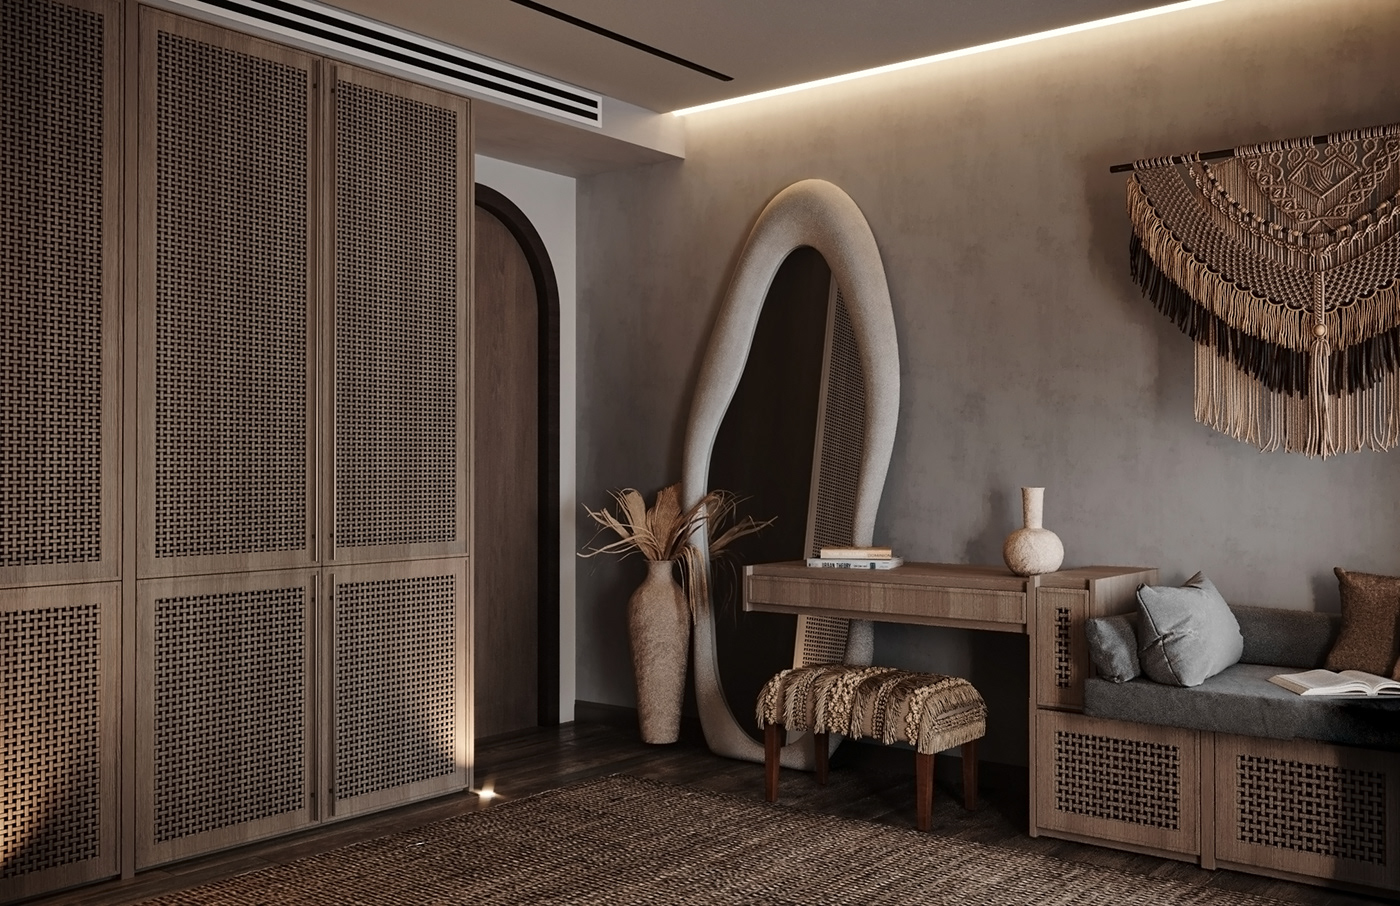 3dmax Render visualization archviz corona Wabi Sabi architecture Interior bedroom interior design 